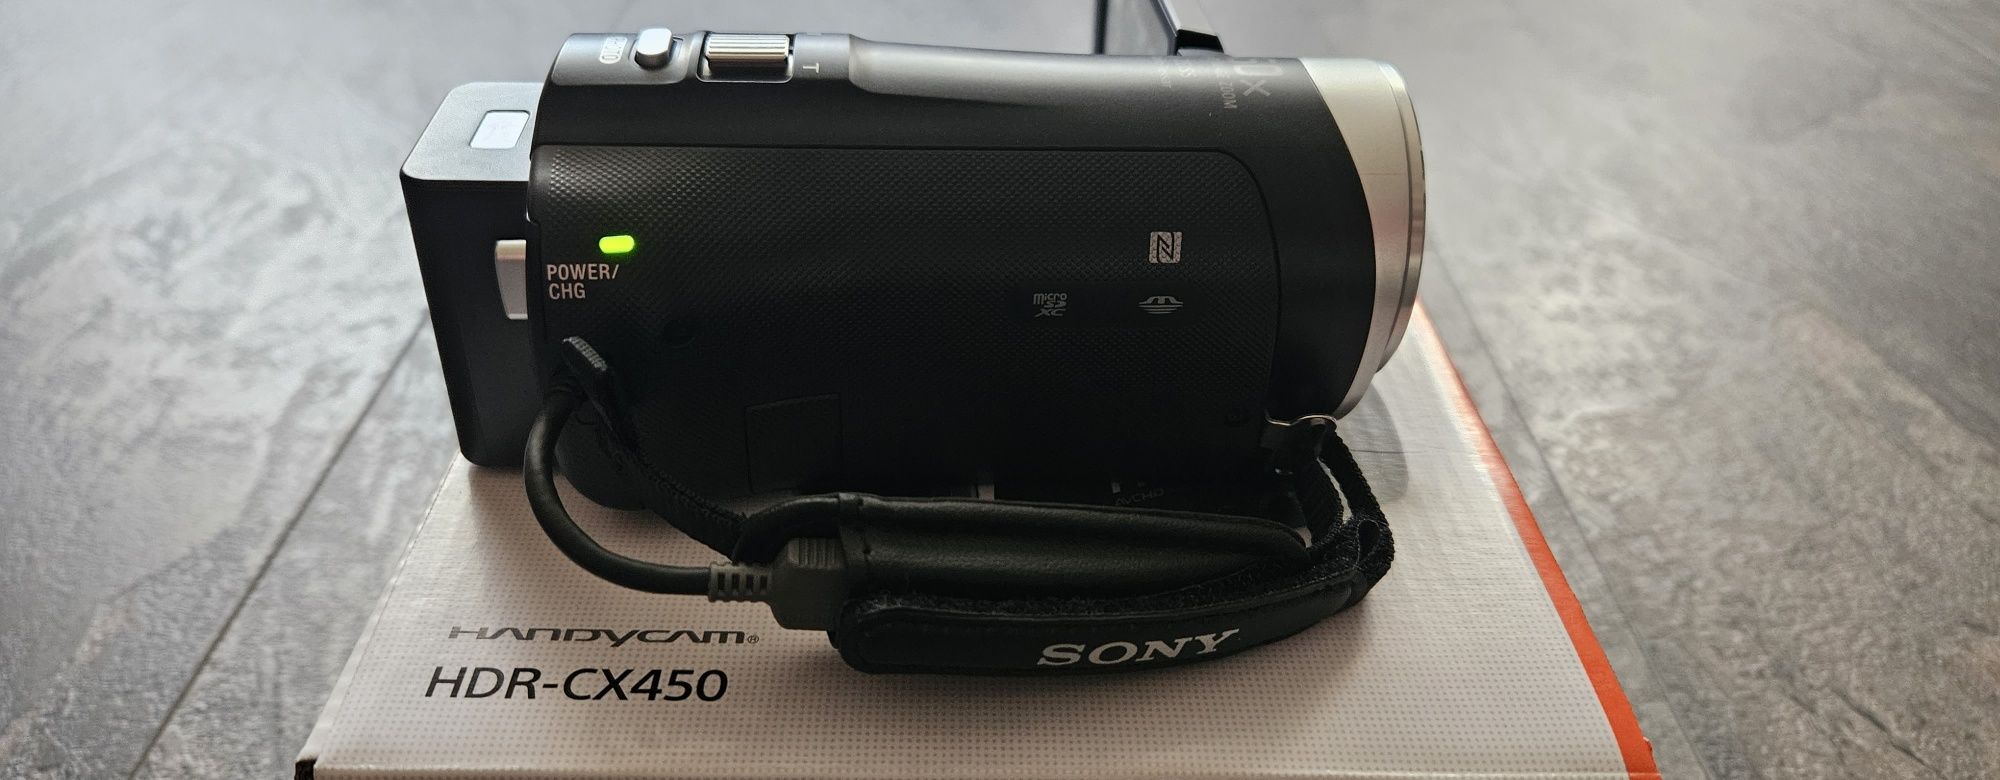 Продавам видеокамера Sony HDR - CX450 включена само за проба